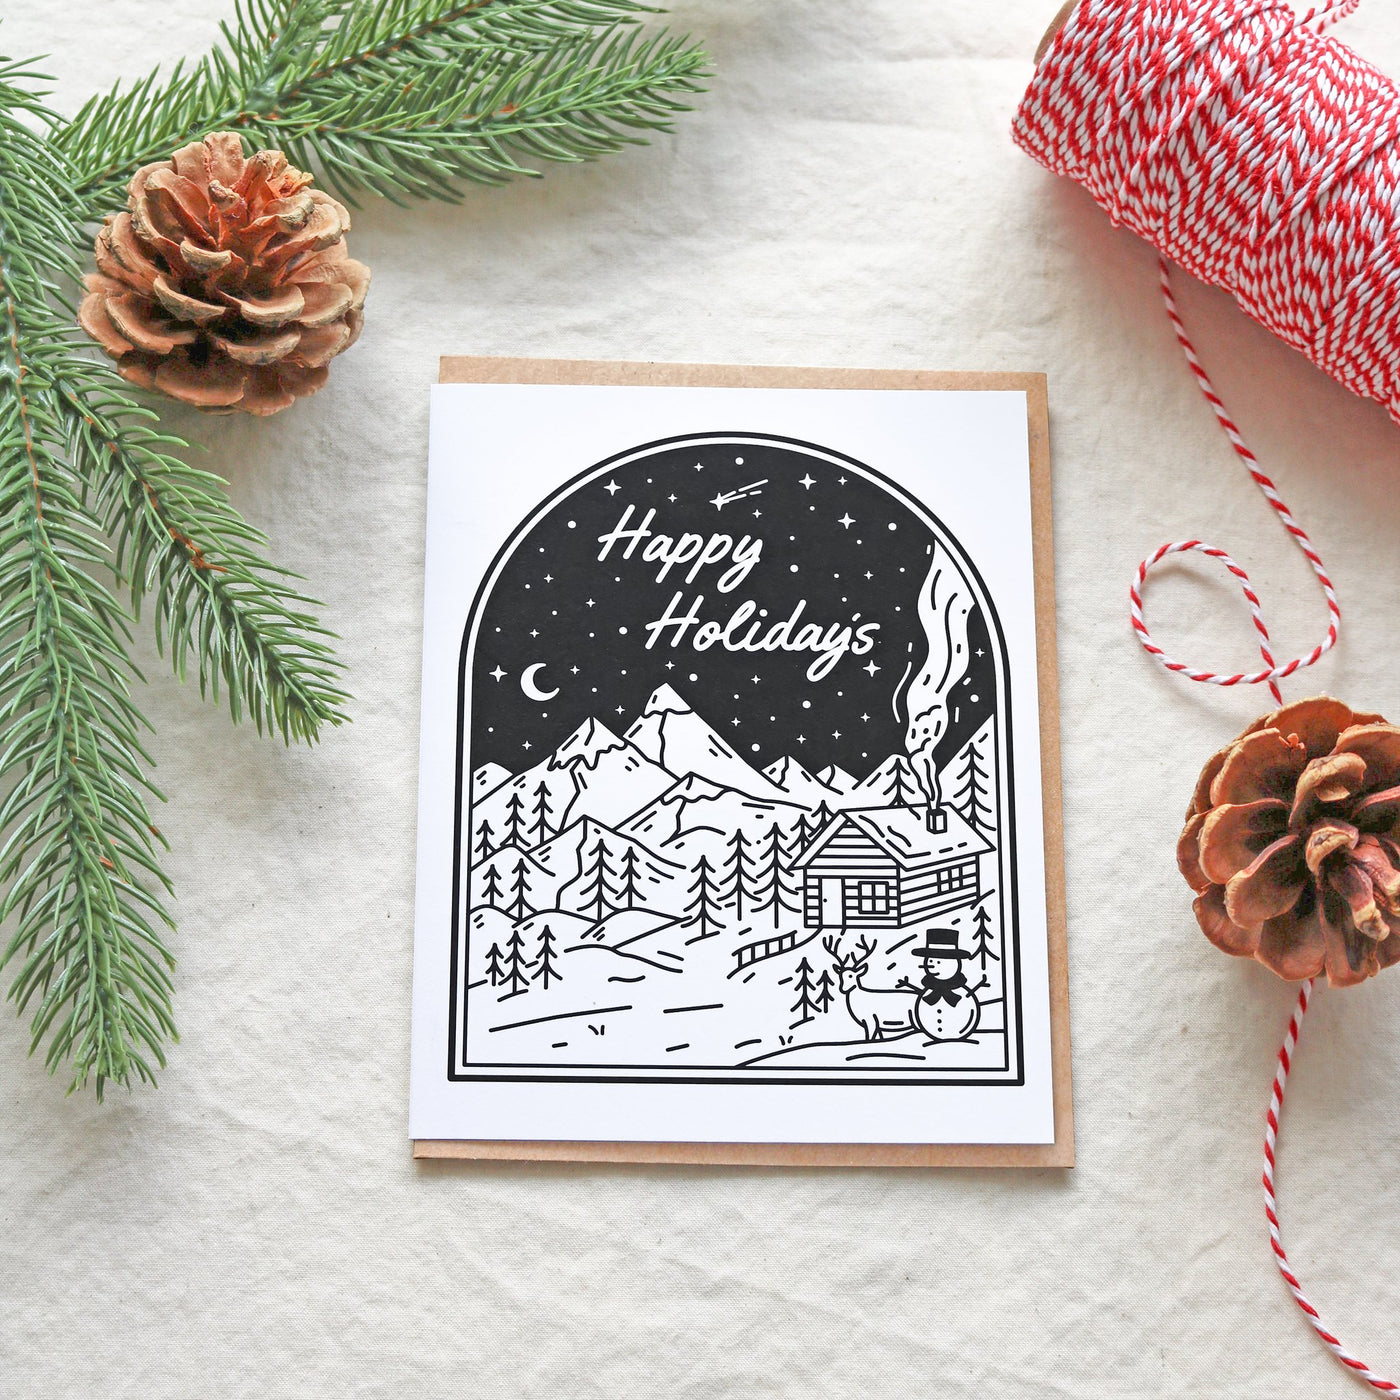 Happy Holidays Greeting Card by Nick Alan Art